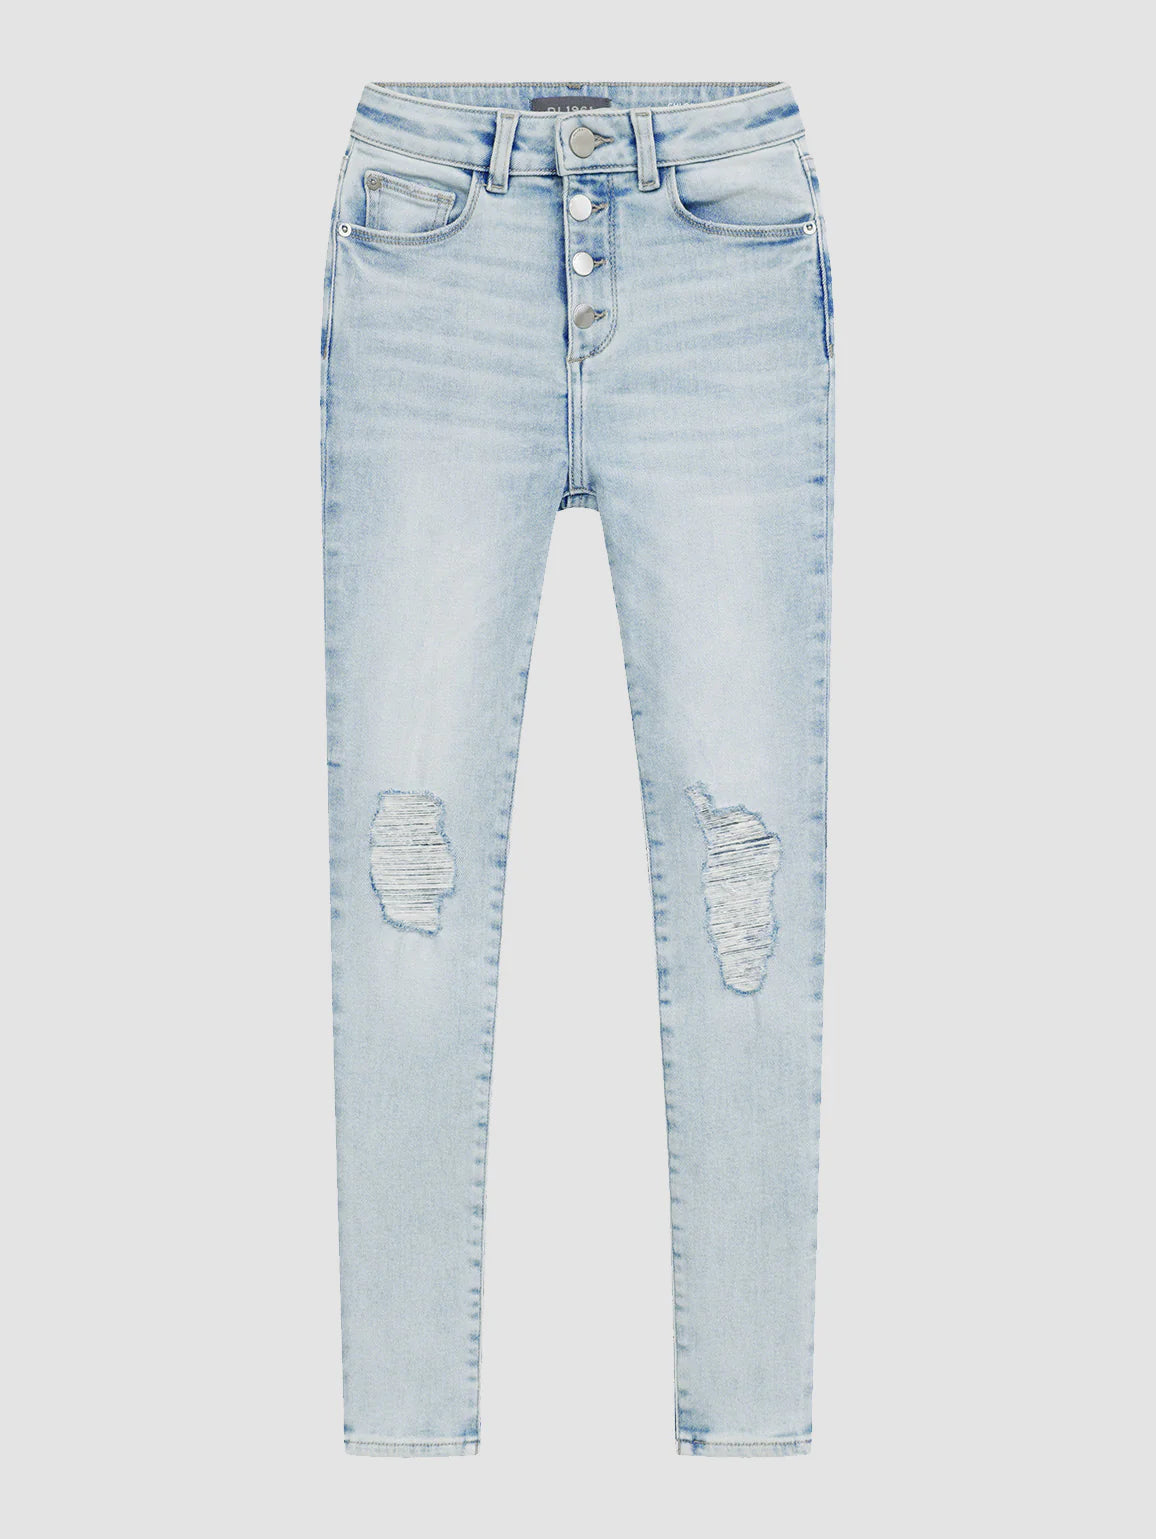 DL1961 Girls Chloe Skinny Jeans